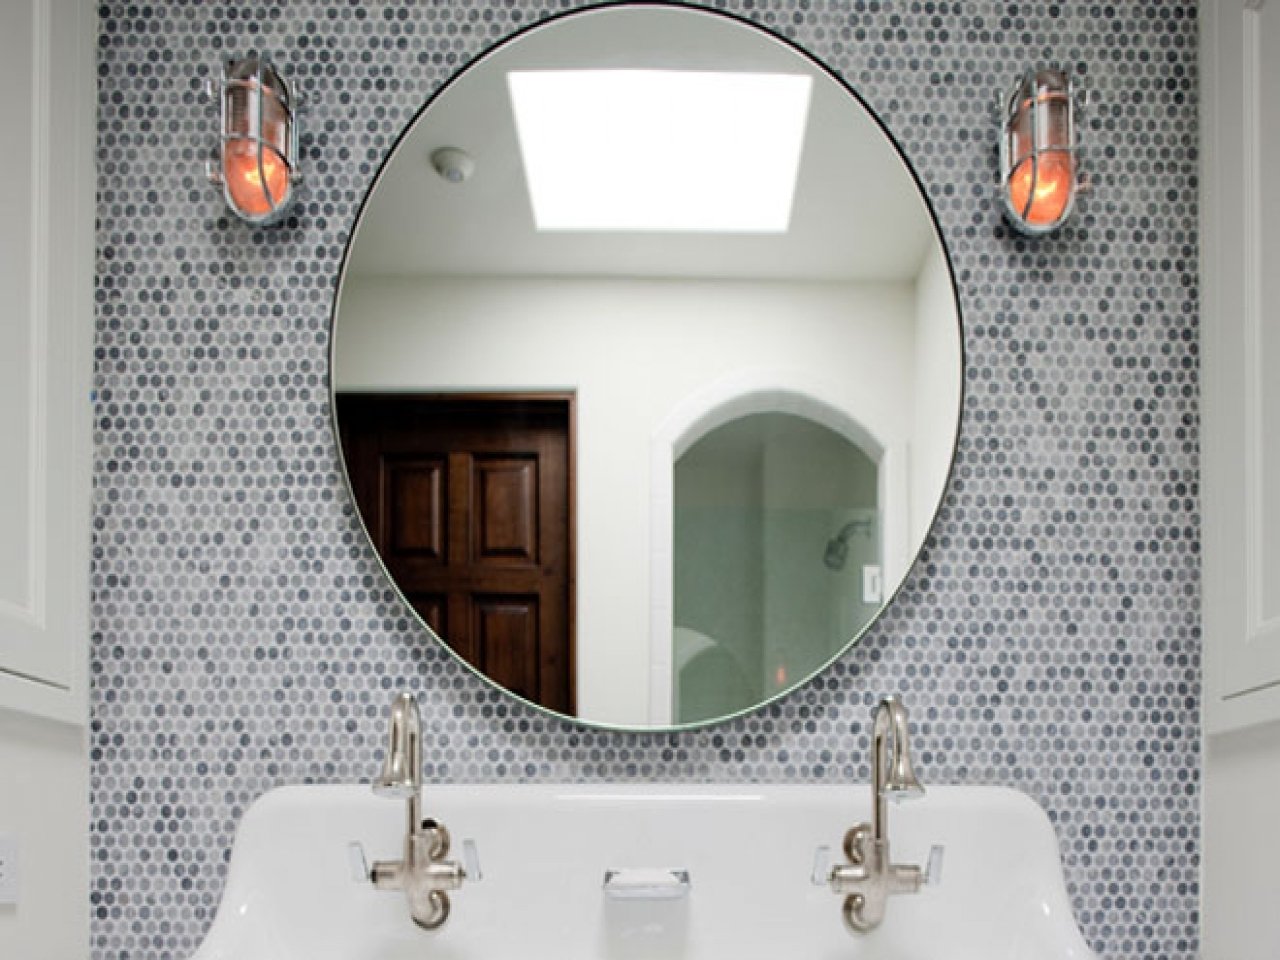 Зеркало на стене без рамки. Зеркало для ванной комнаты. Круглое зеркало в ванной. Ванна с круглым зеркалом. Ванная комната с круглым зеркалом.